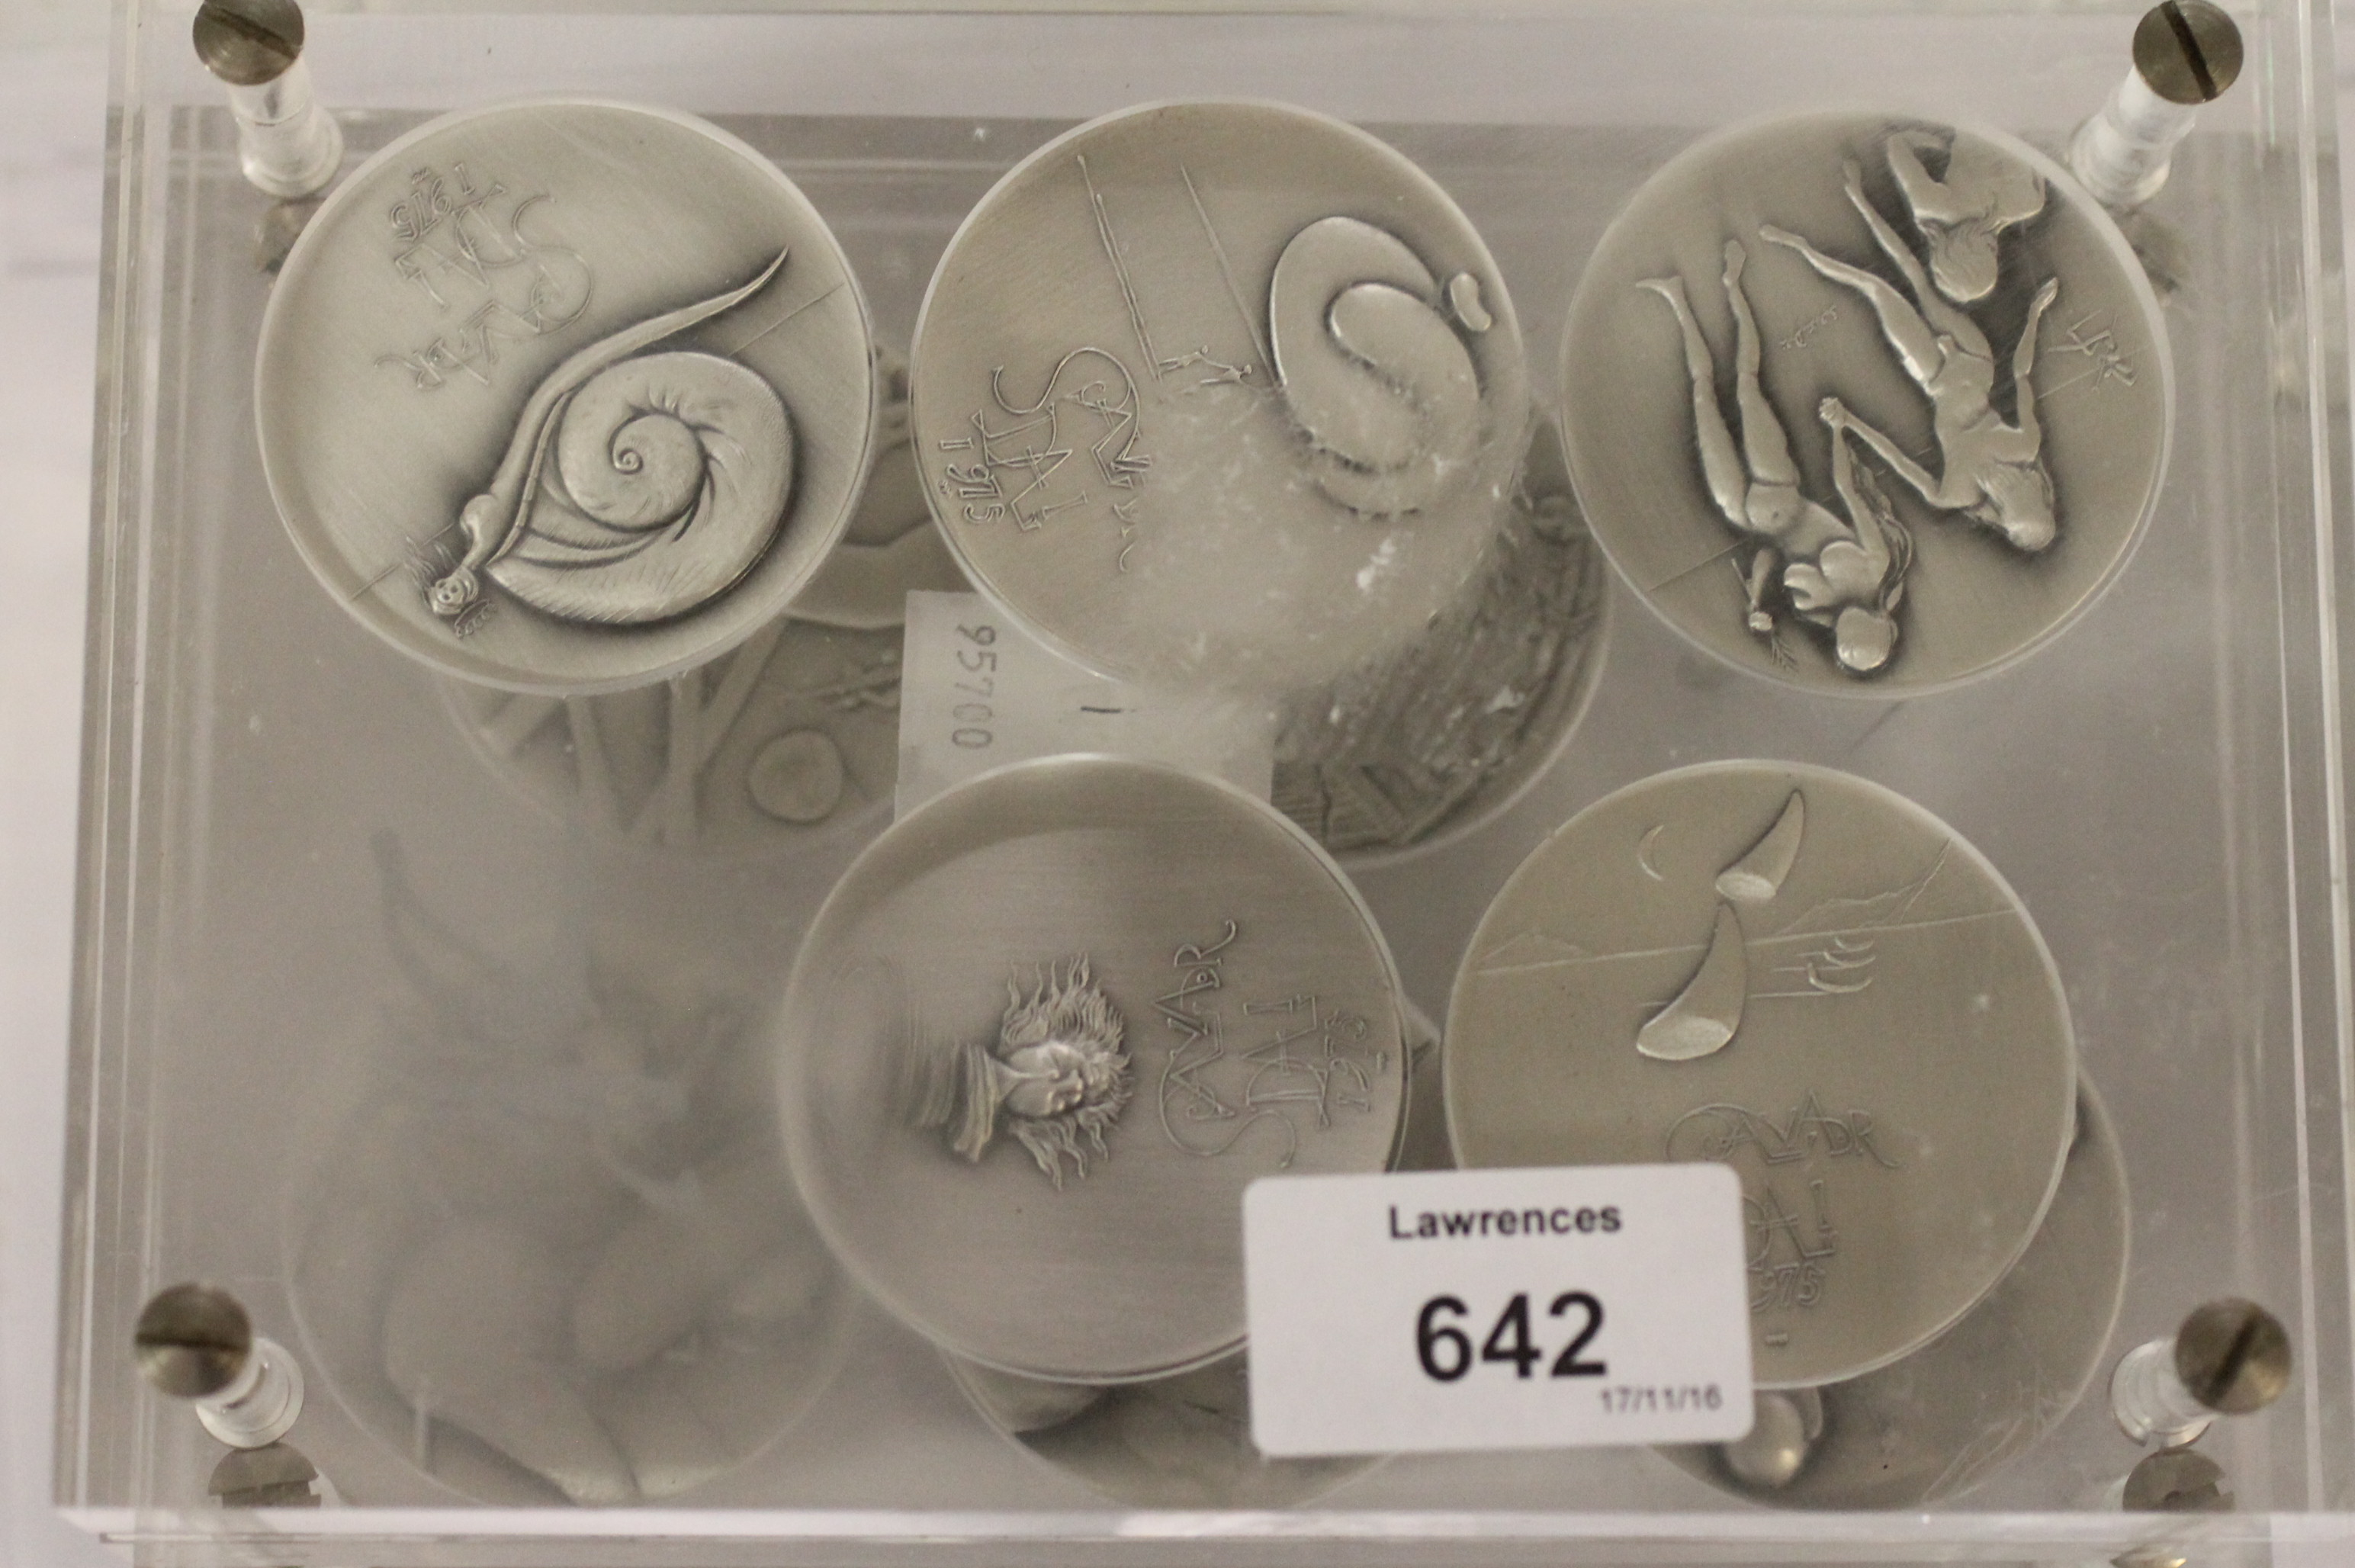 CASED SALVADOR DALI SILVER MEDALLIONS. (10) Acrylic cased Salvador Dali medallions with 1975 and